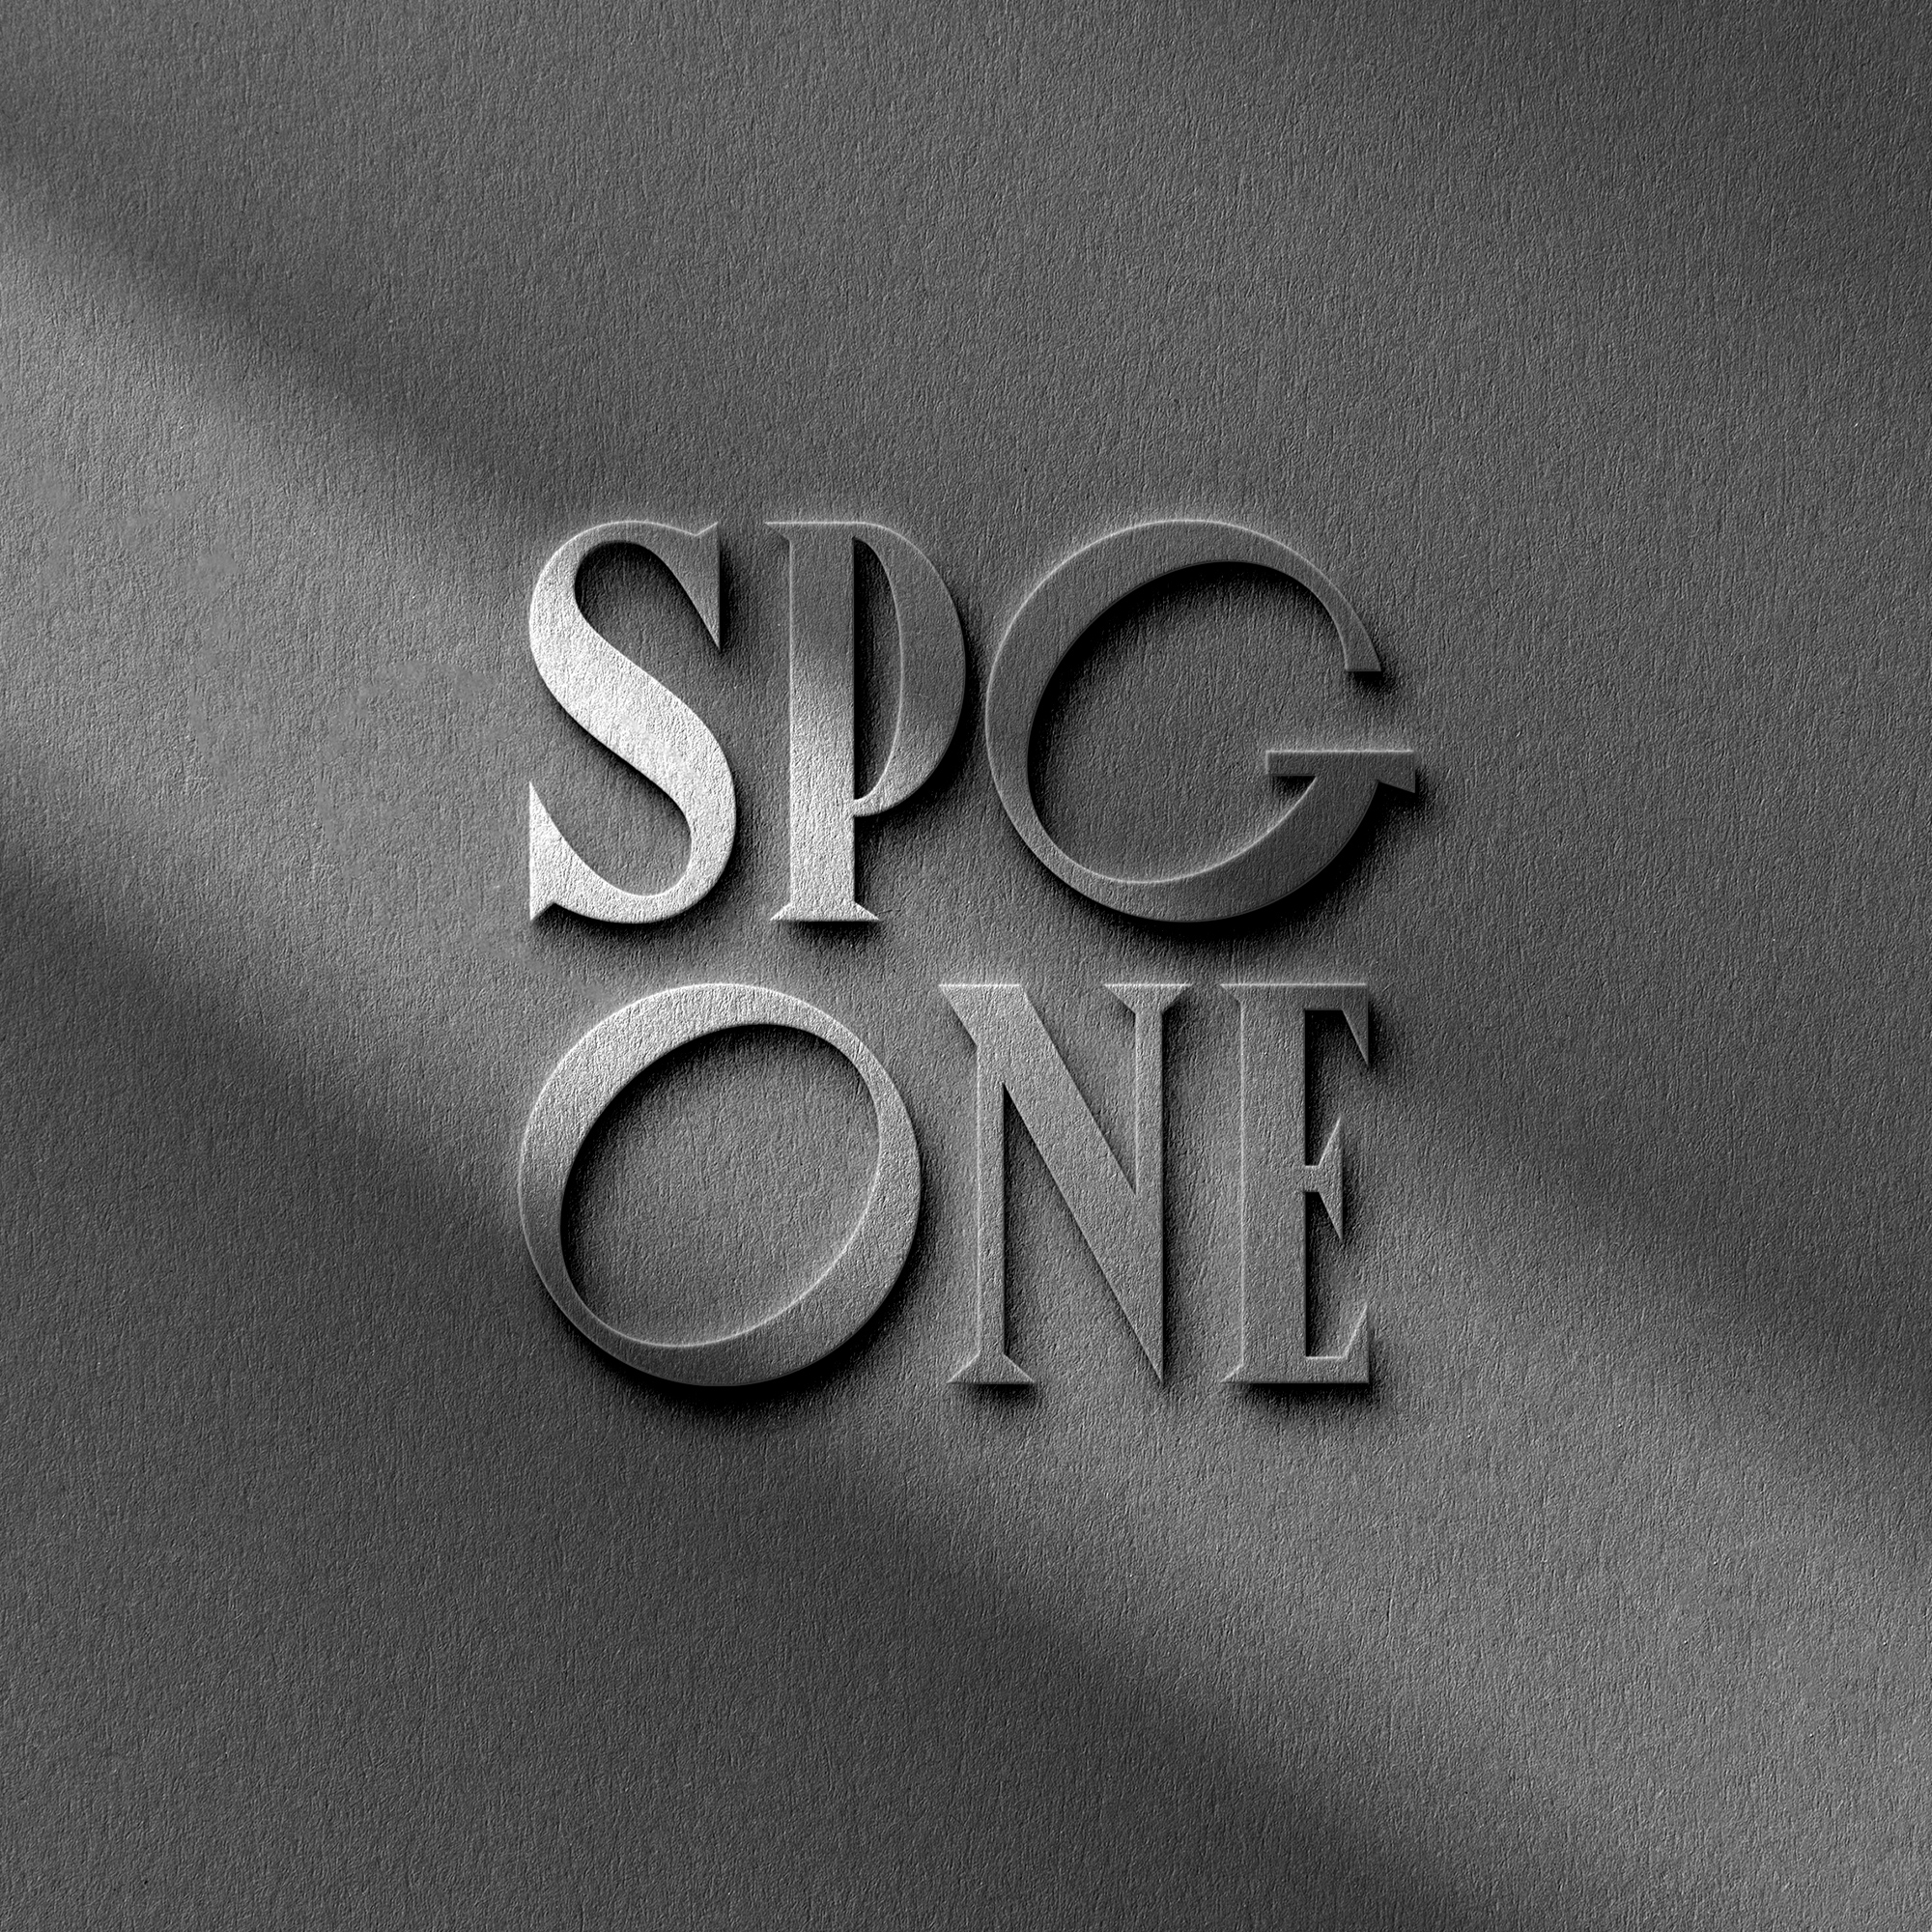 Spg logo